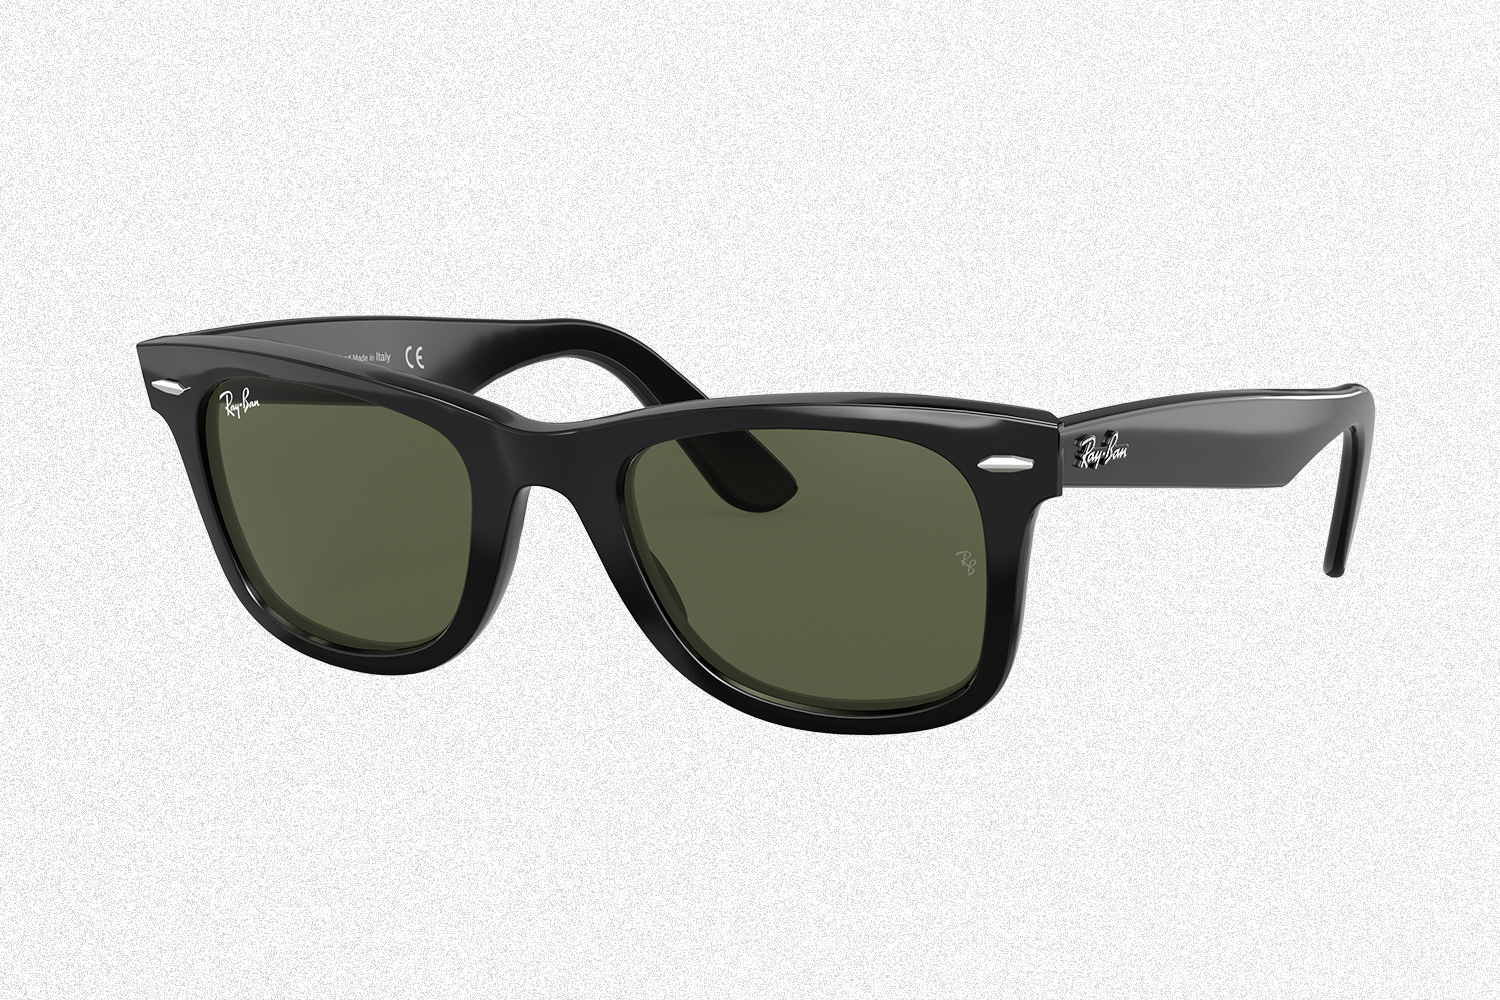 Ray-Ban Wayfarer sunglasses in black with polarized lenses